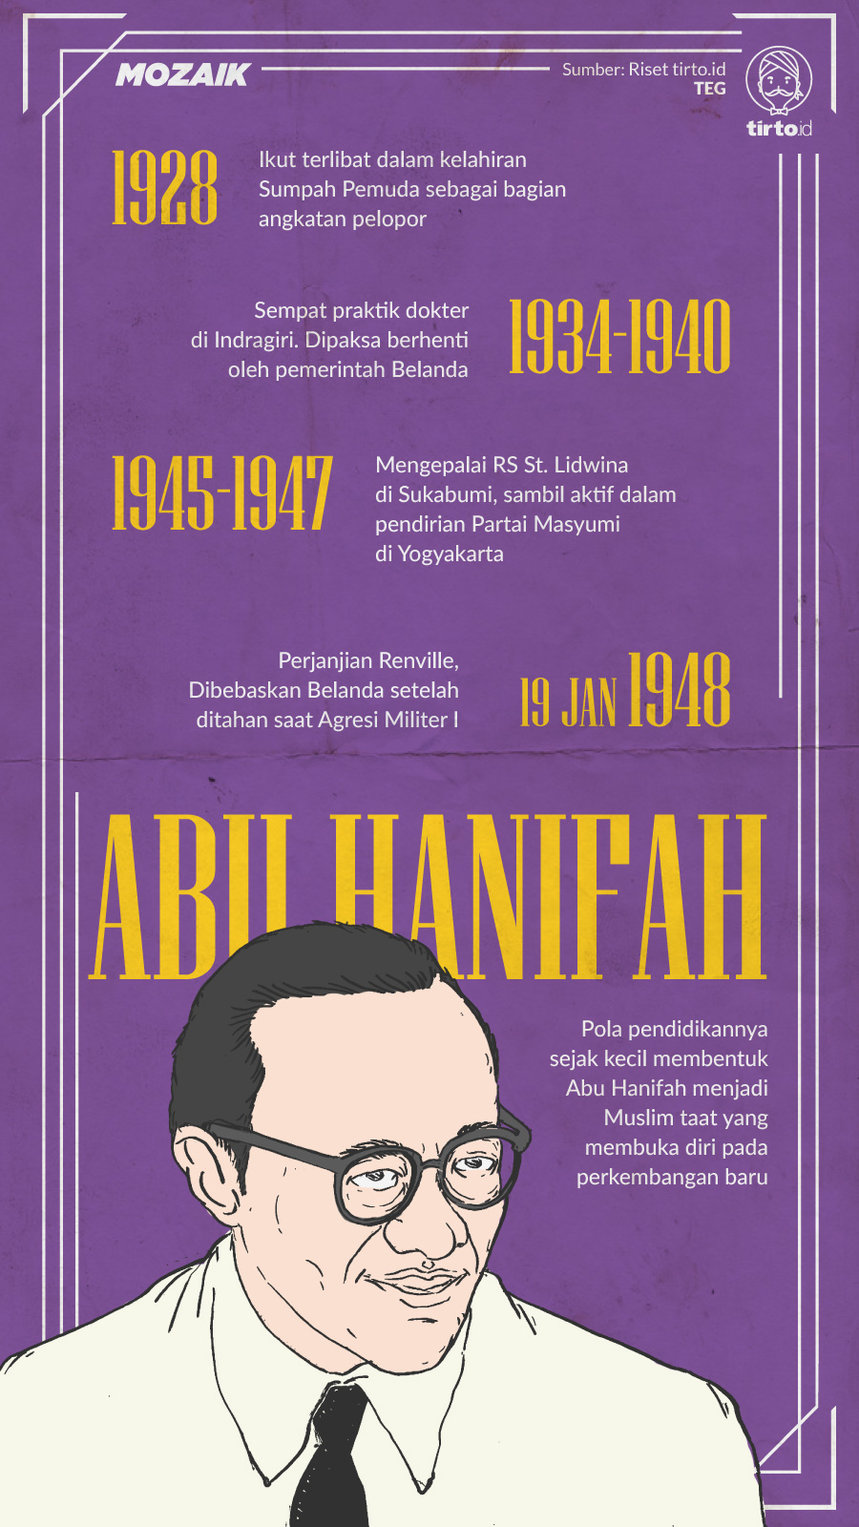 Infografik Mozaik Abu Hanifah